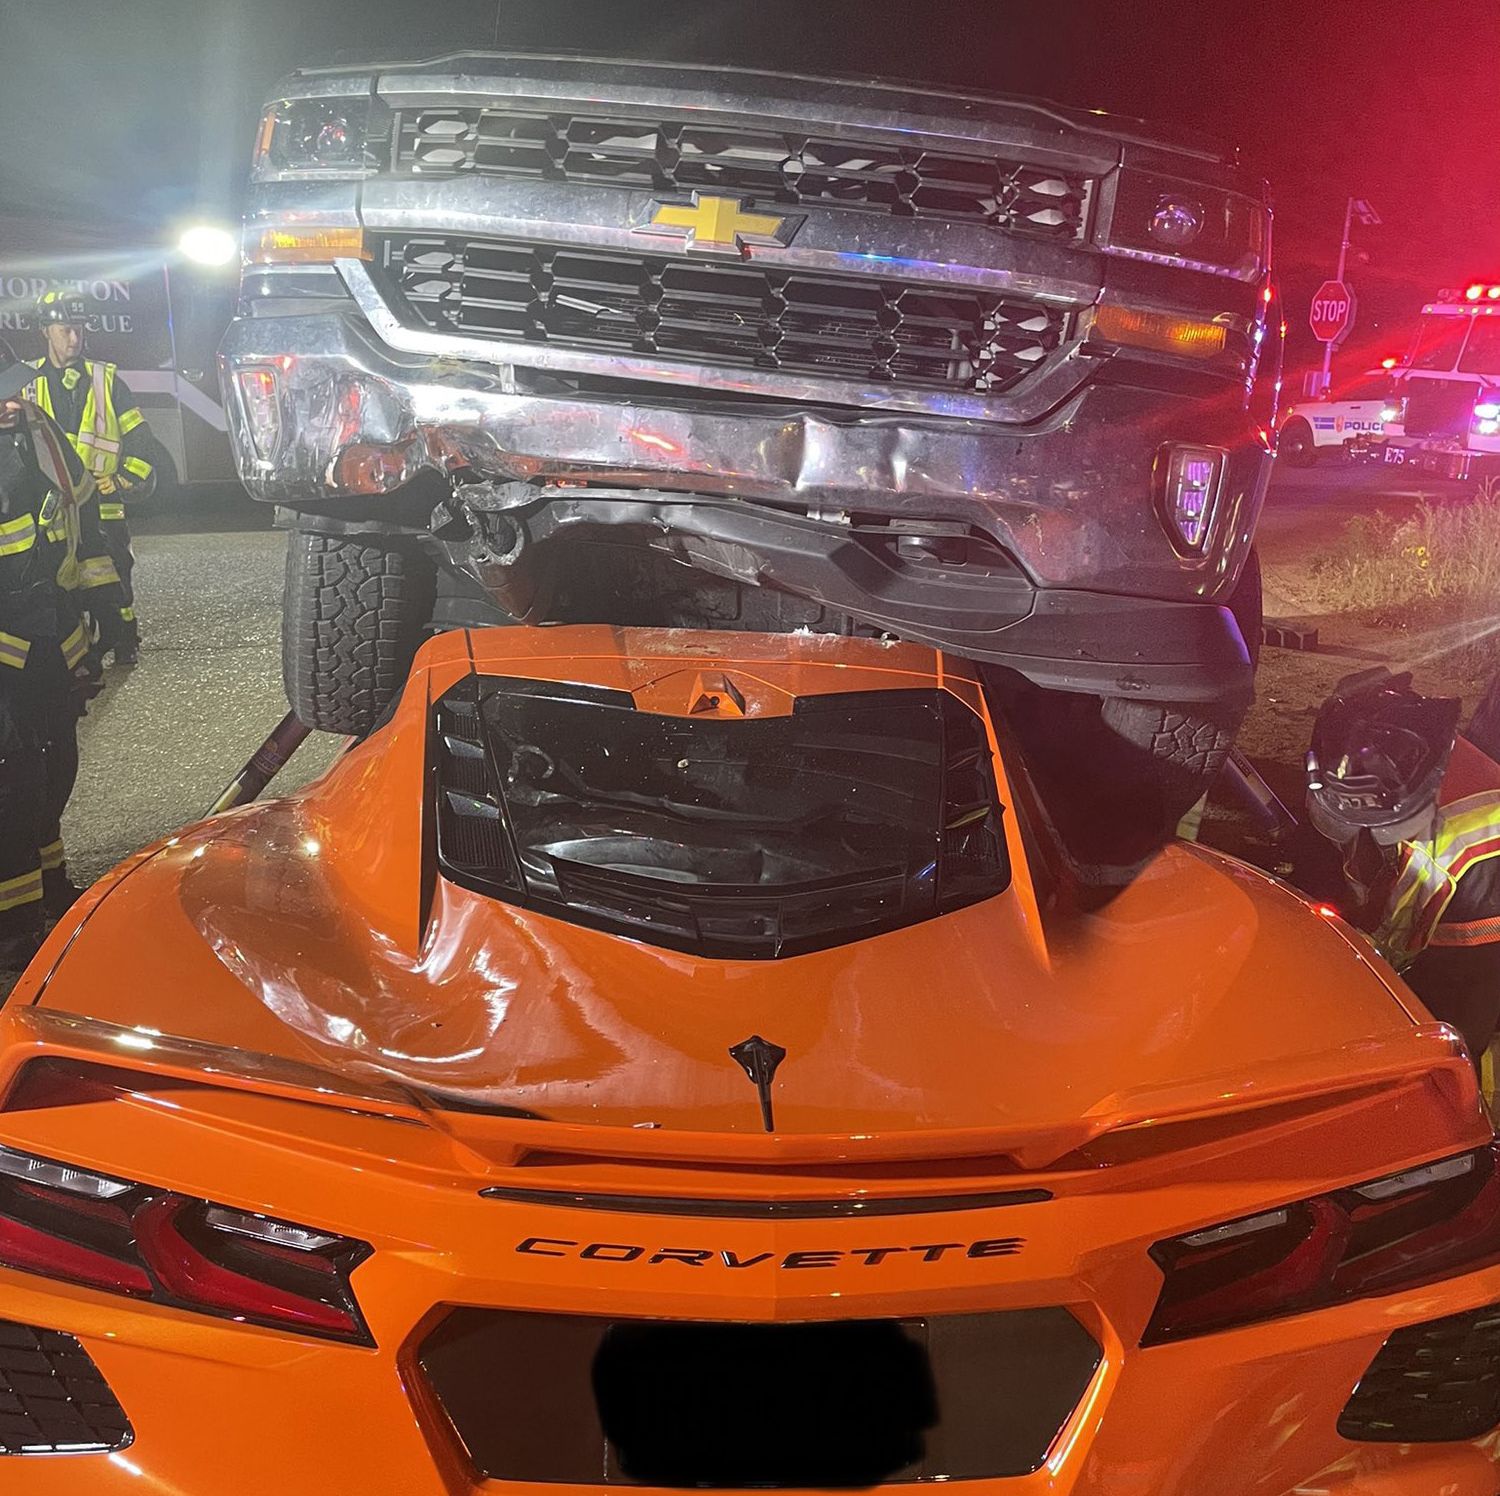 C8 Corvette Occupants Walk Away After Truck Lands on Windshield